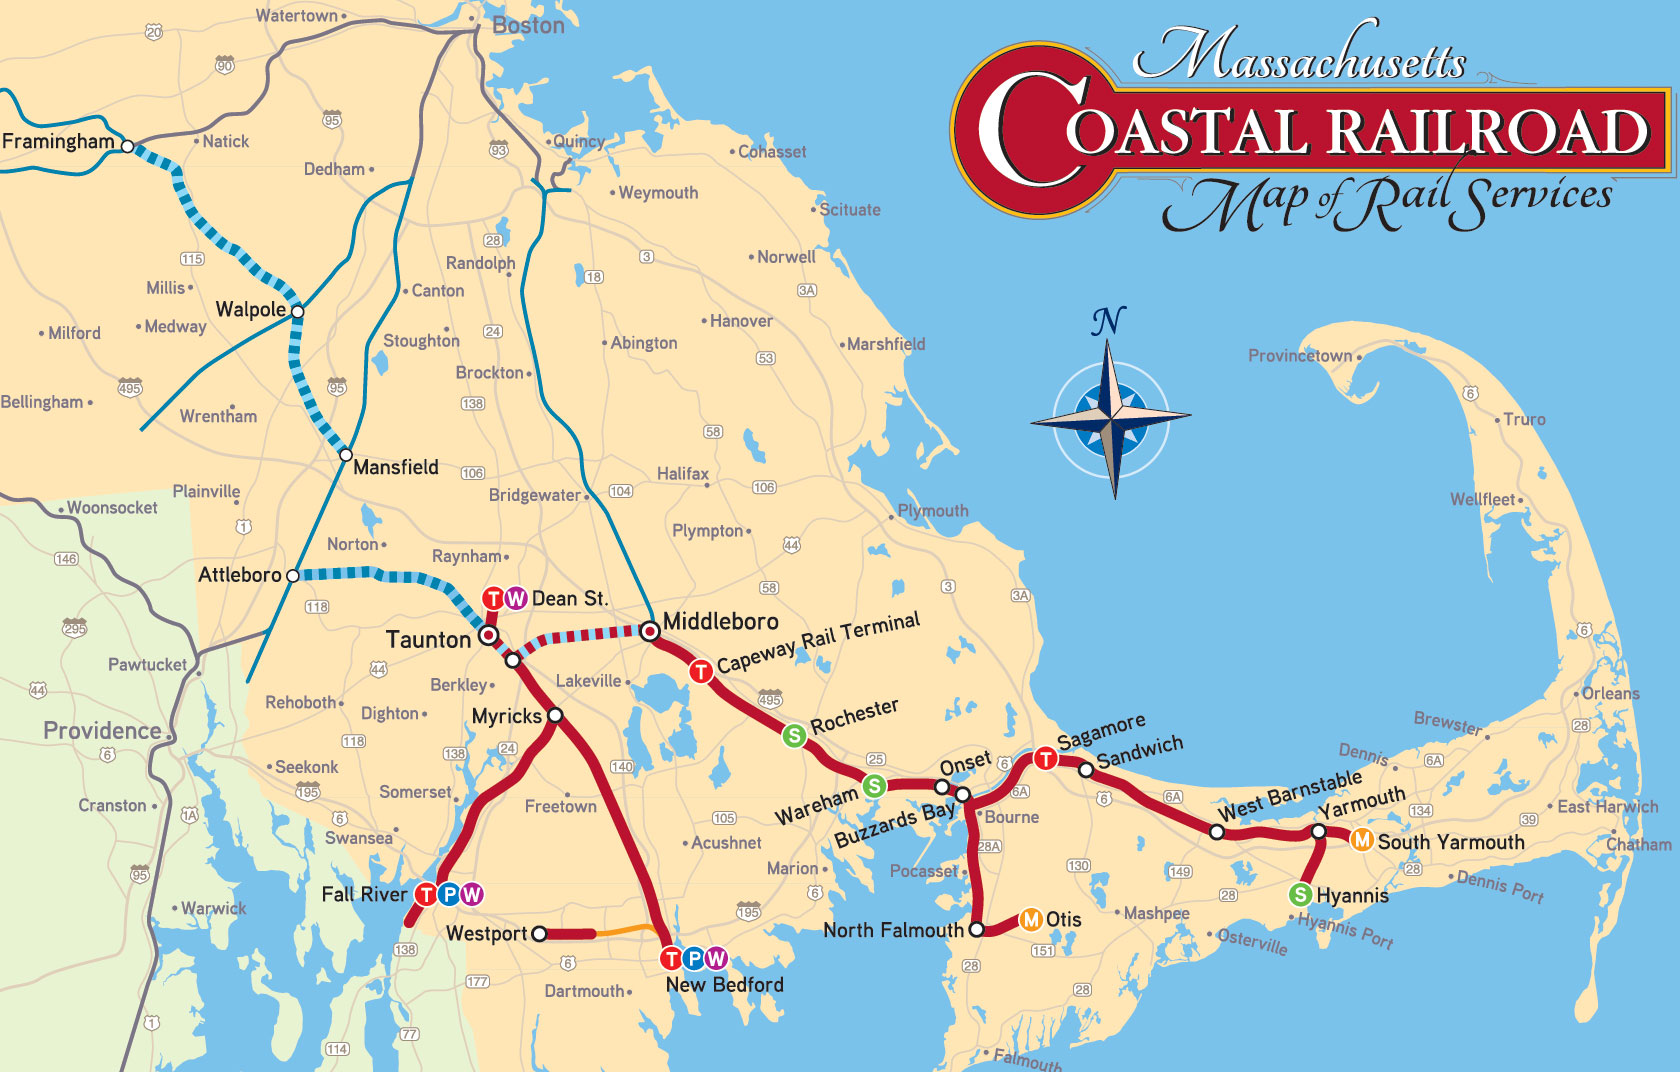 Massachusetts Coastal Railroad Map of Rail Services